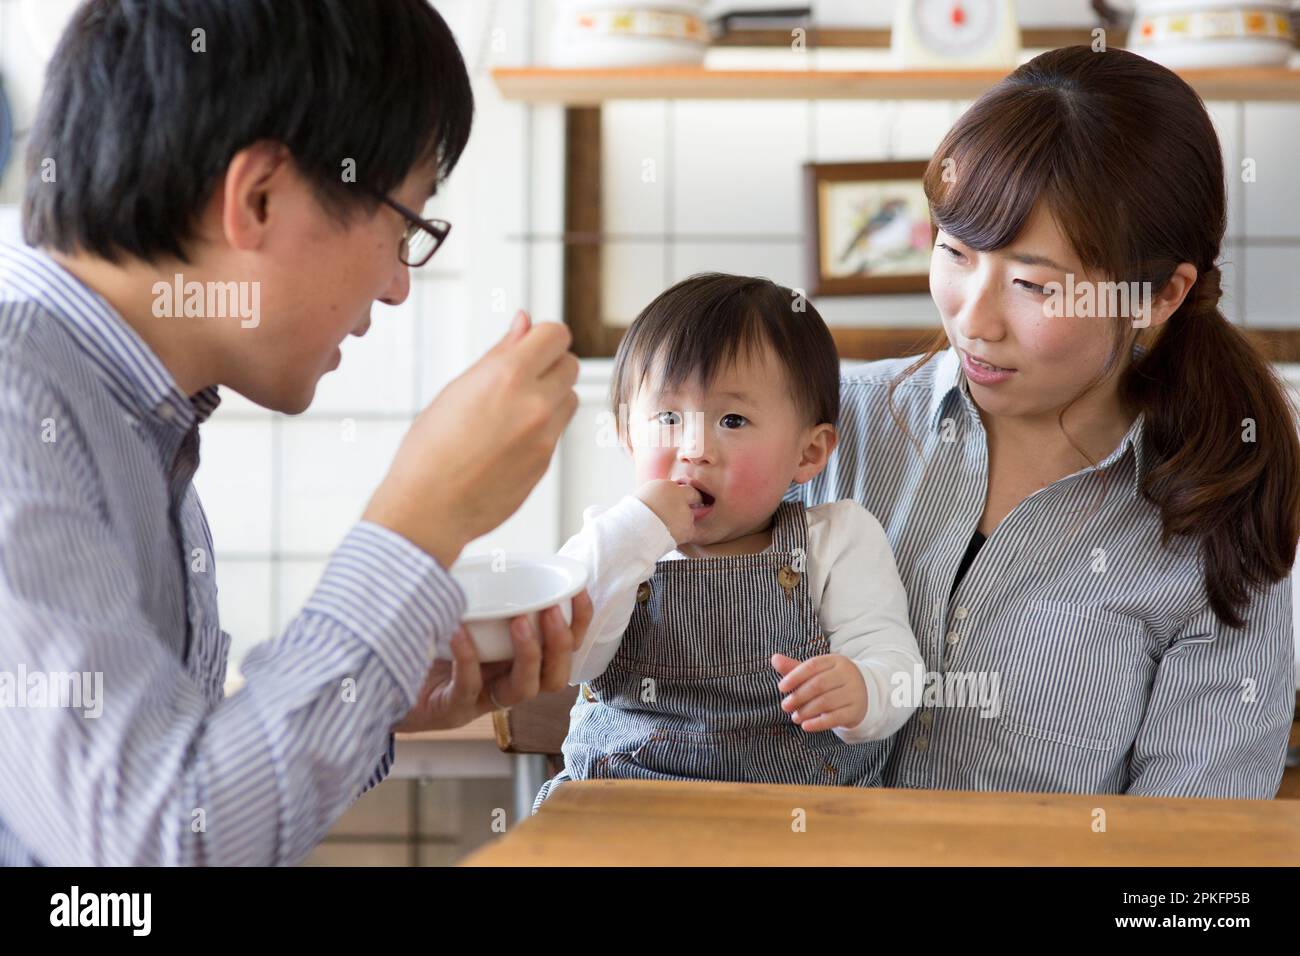 Parents feeding their children Stock Photo